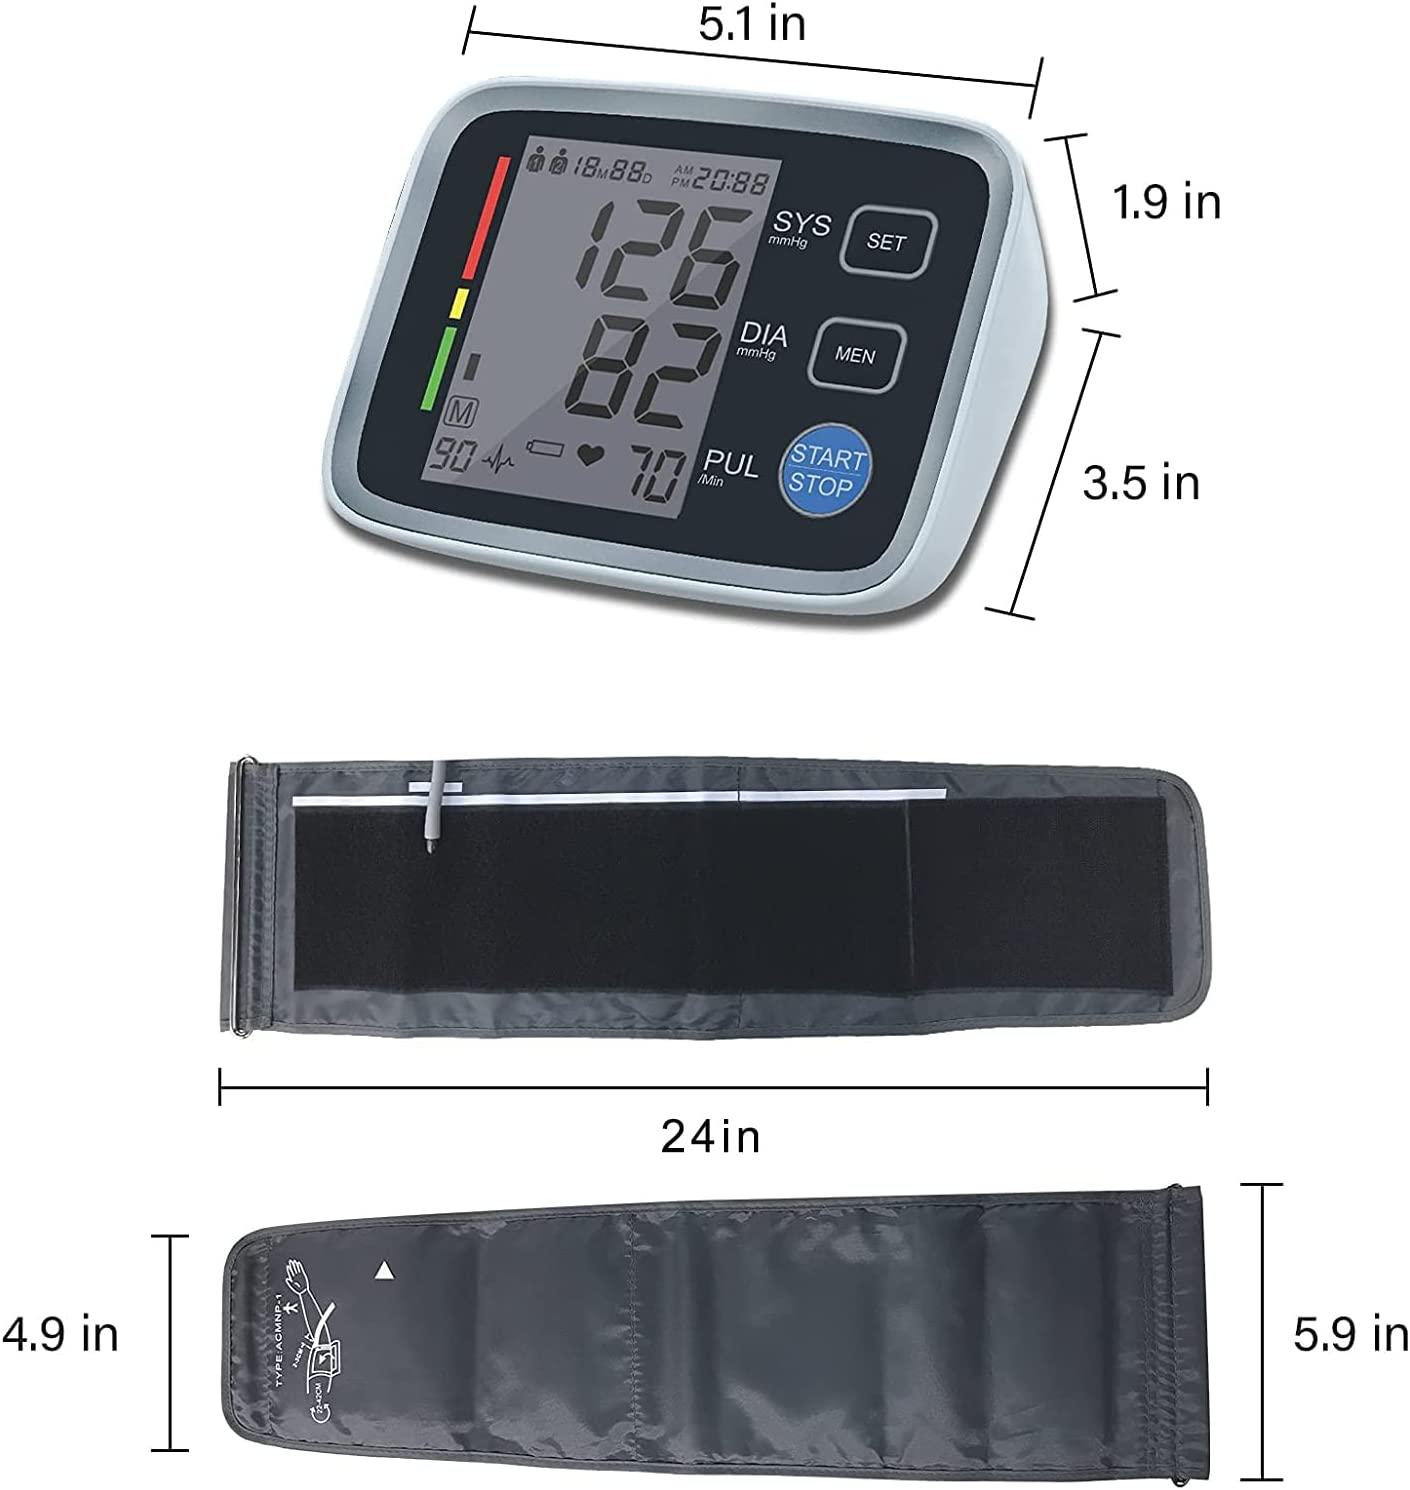 Auto Upper Arm Blood Pressure Machine Monitor, Adjustable Large Xl